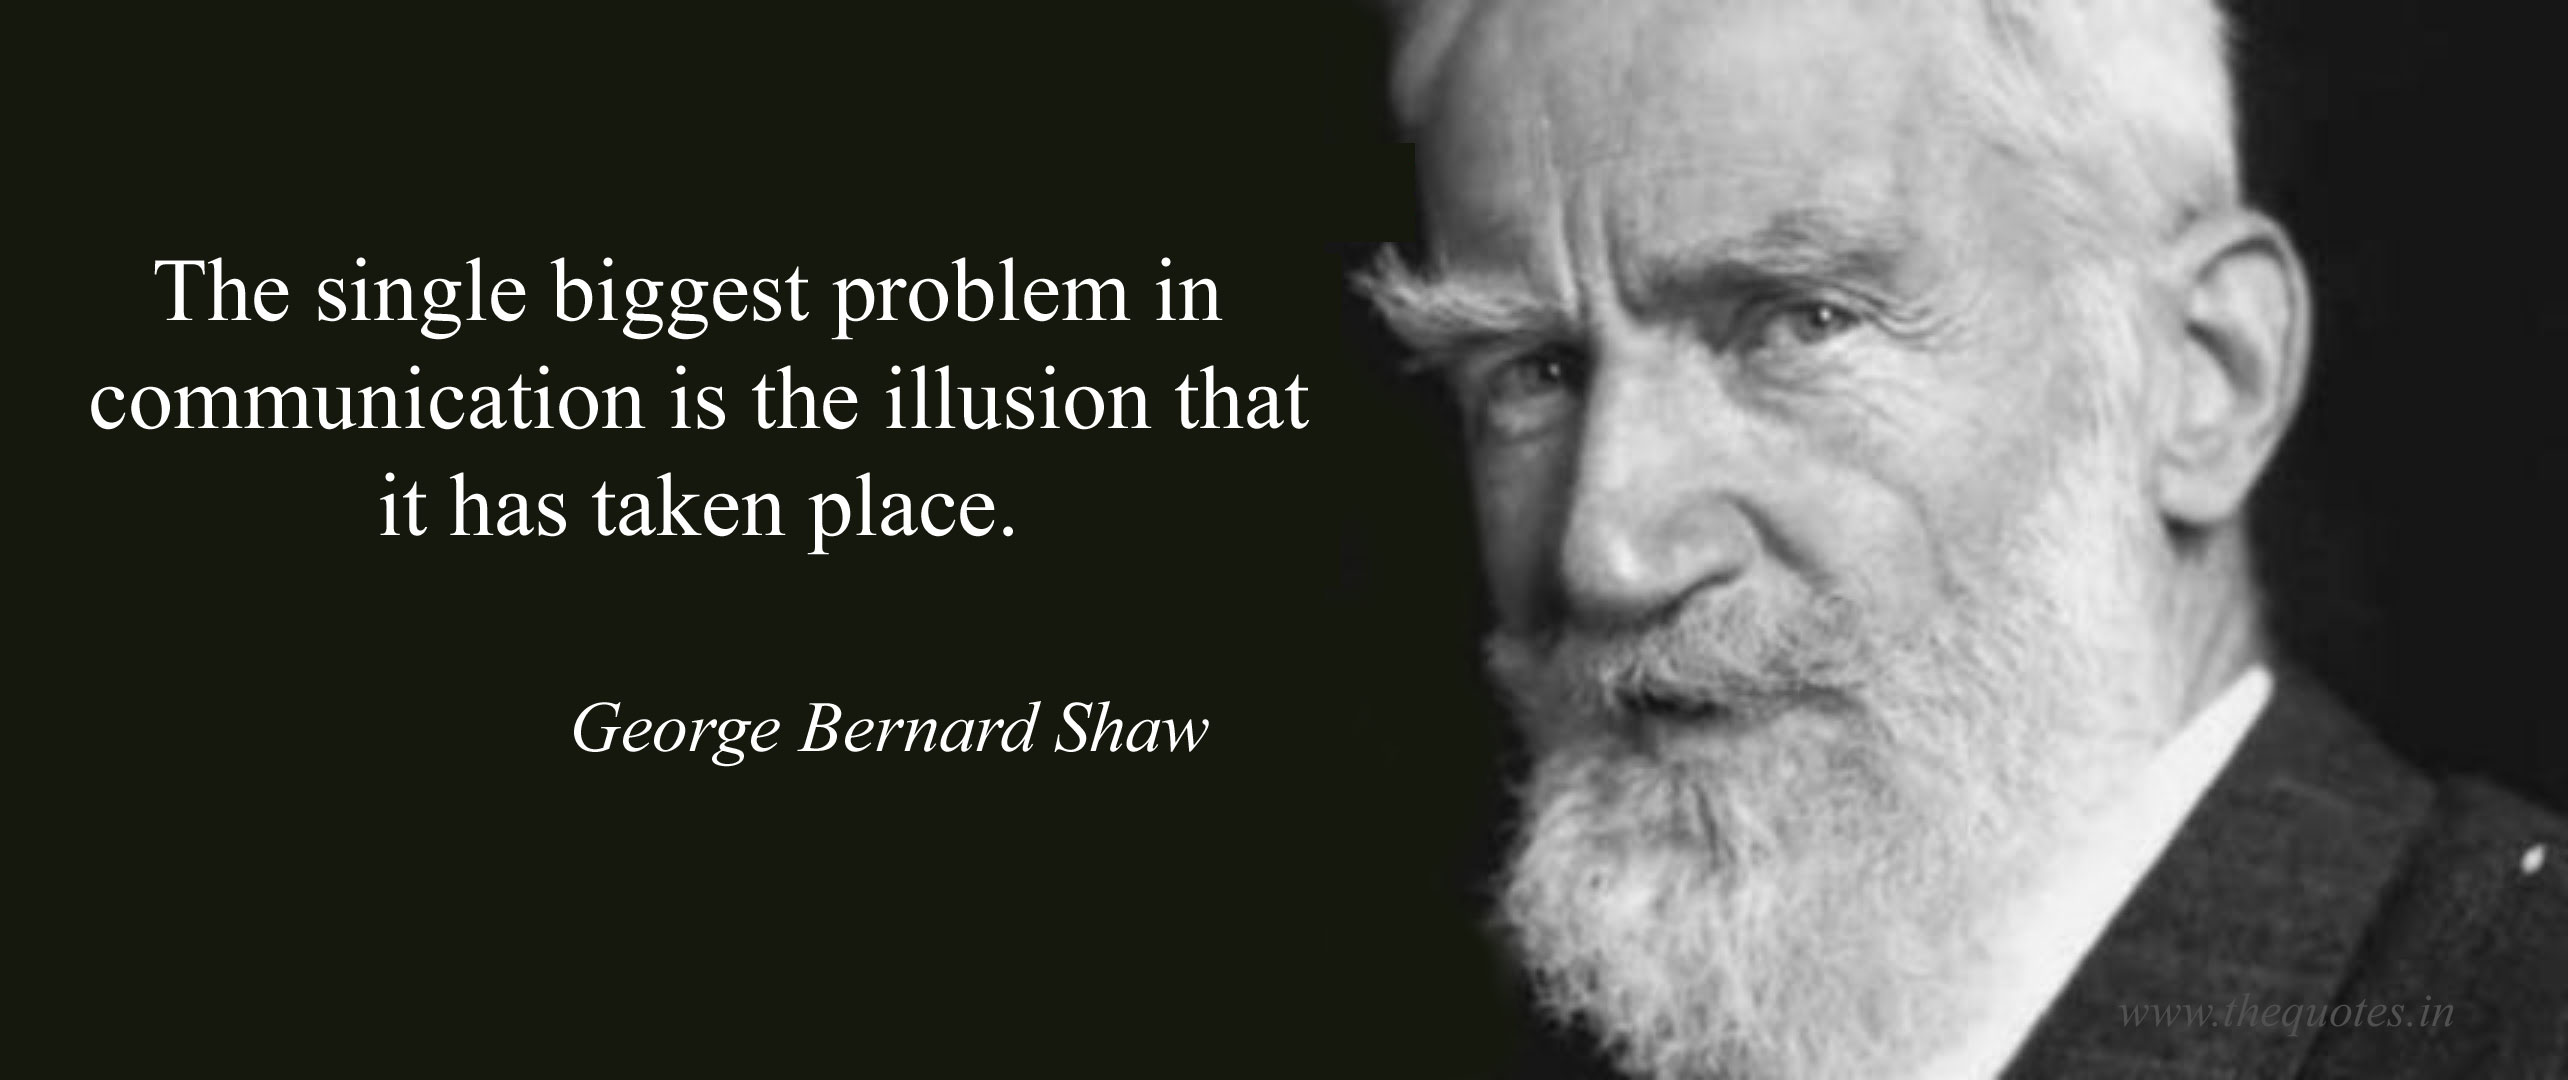 George Bernard Shaw quote communication